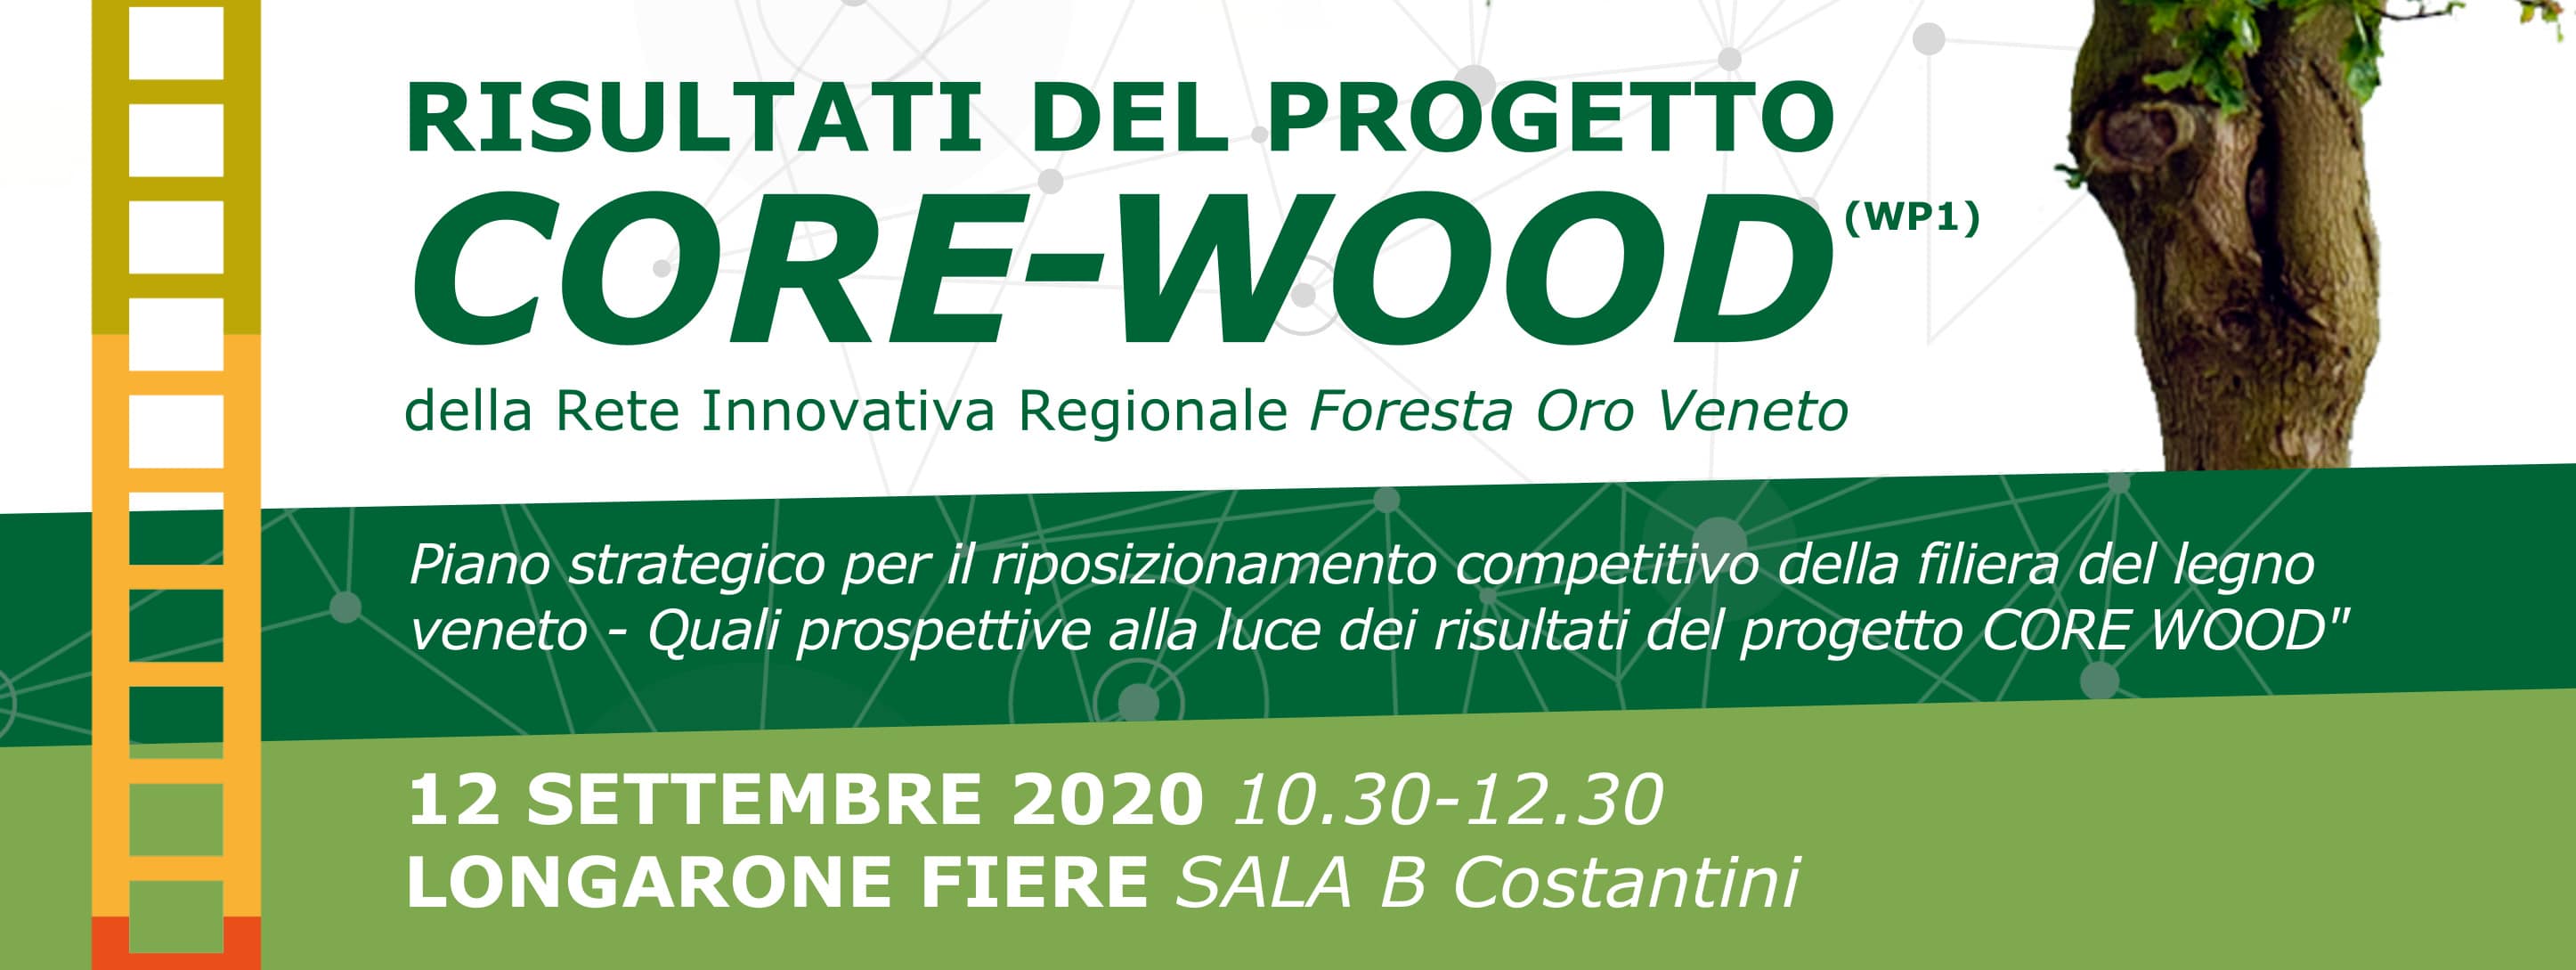 Core-Wood ForestaOroVeneto